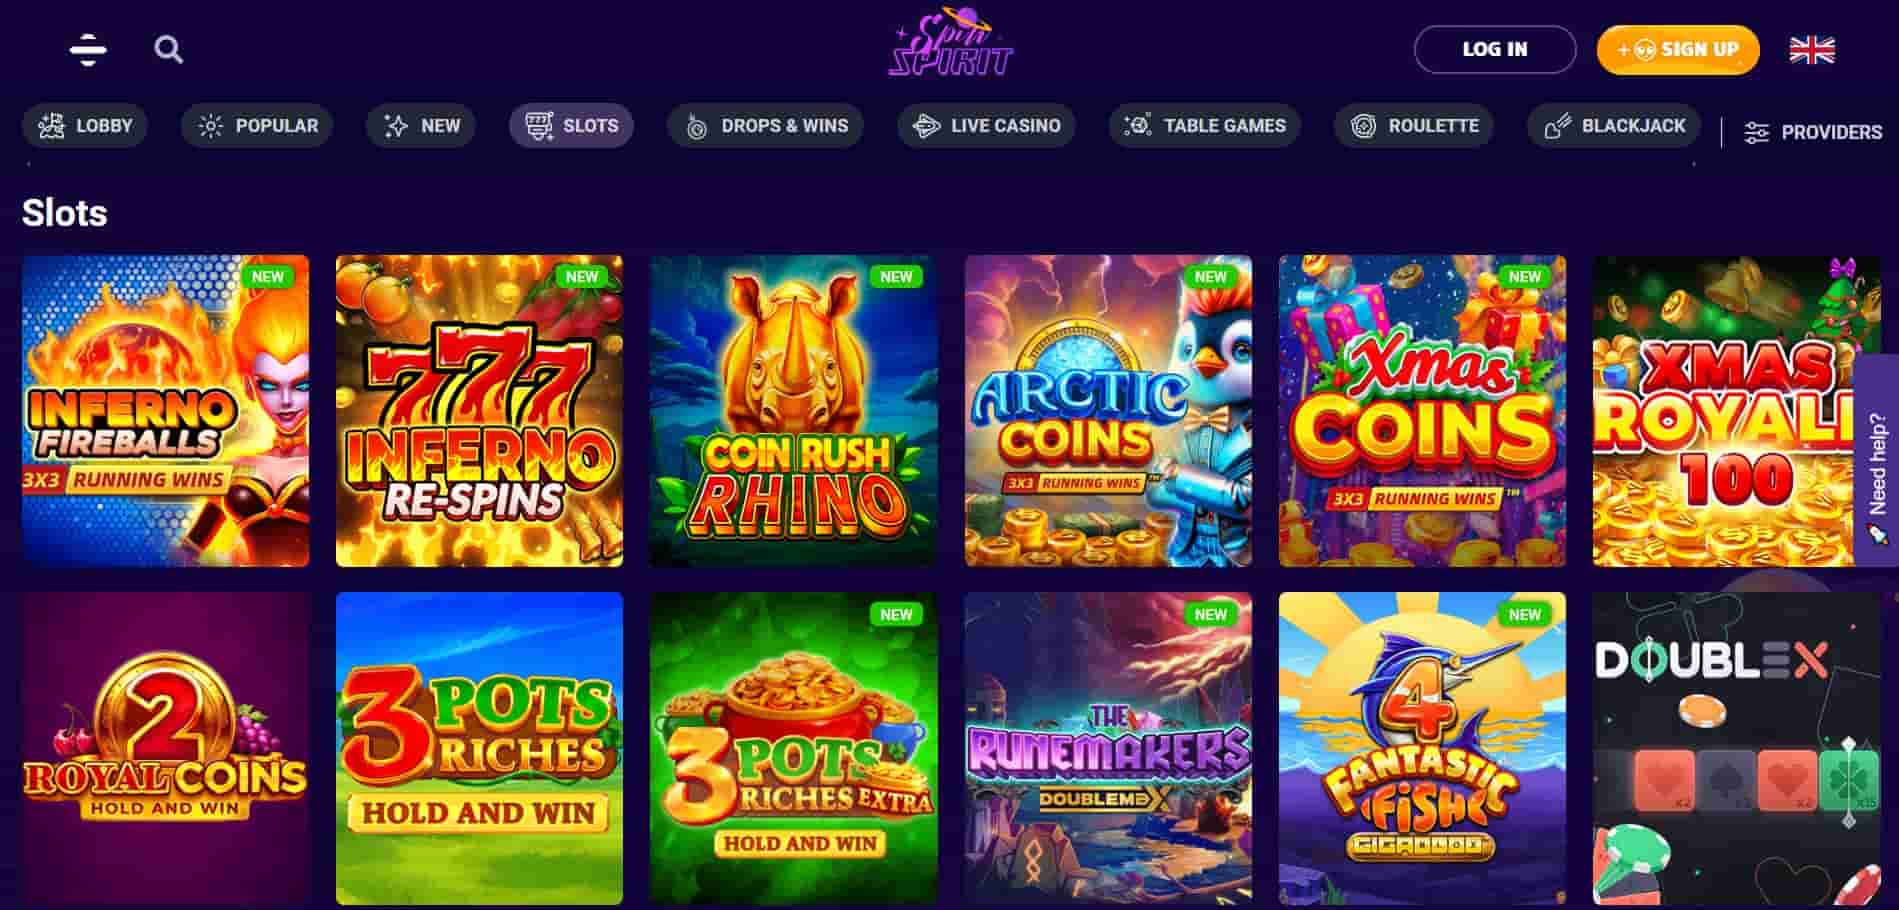  spin spirit casino slots